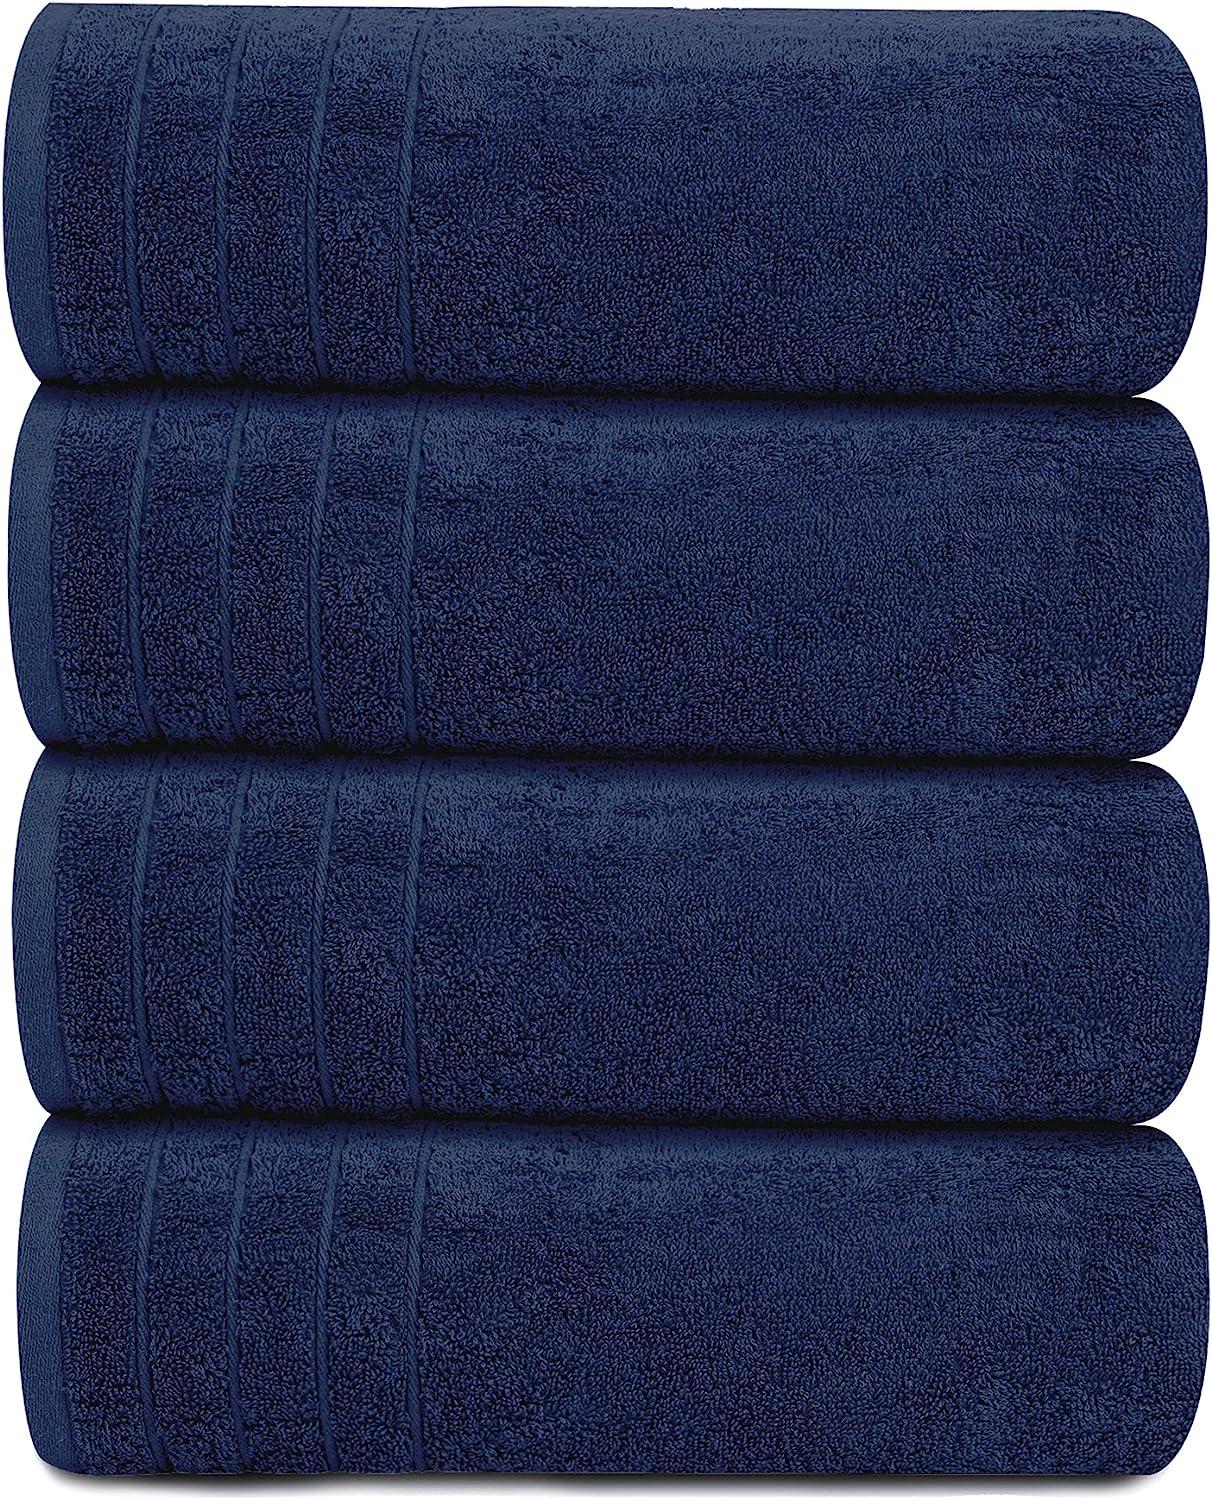 Large Bath Towel Cotton 30x60 (Inches)